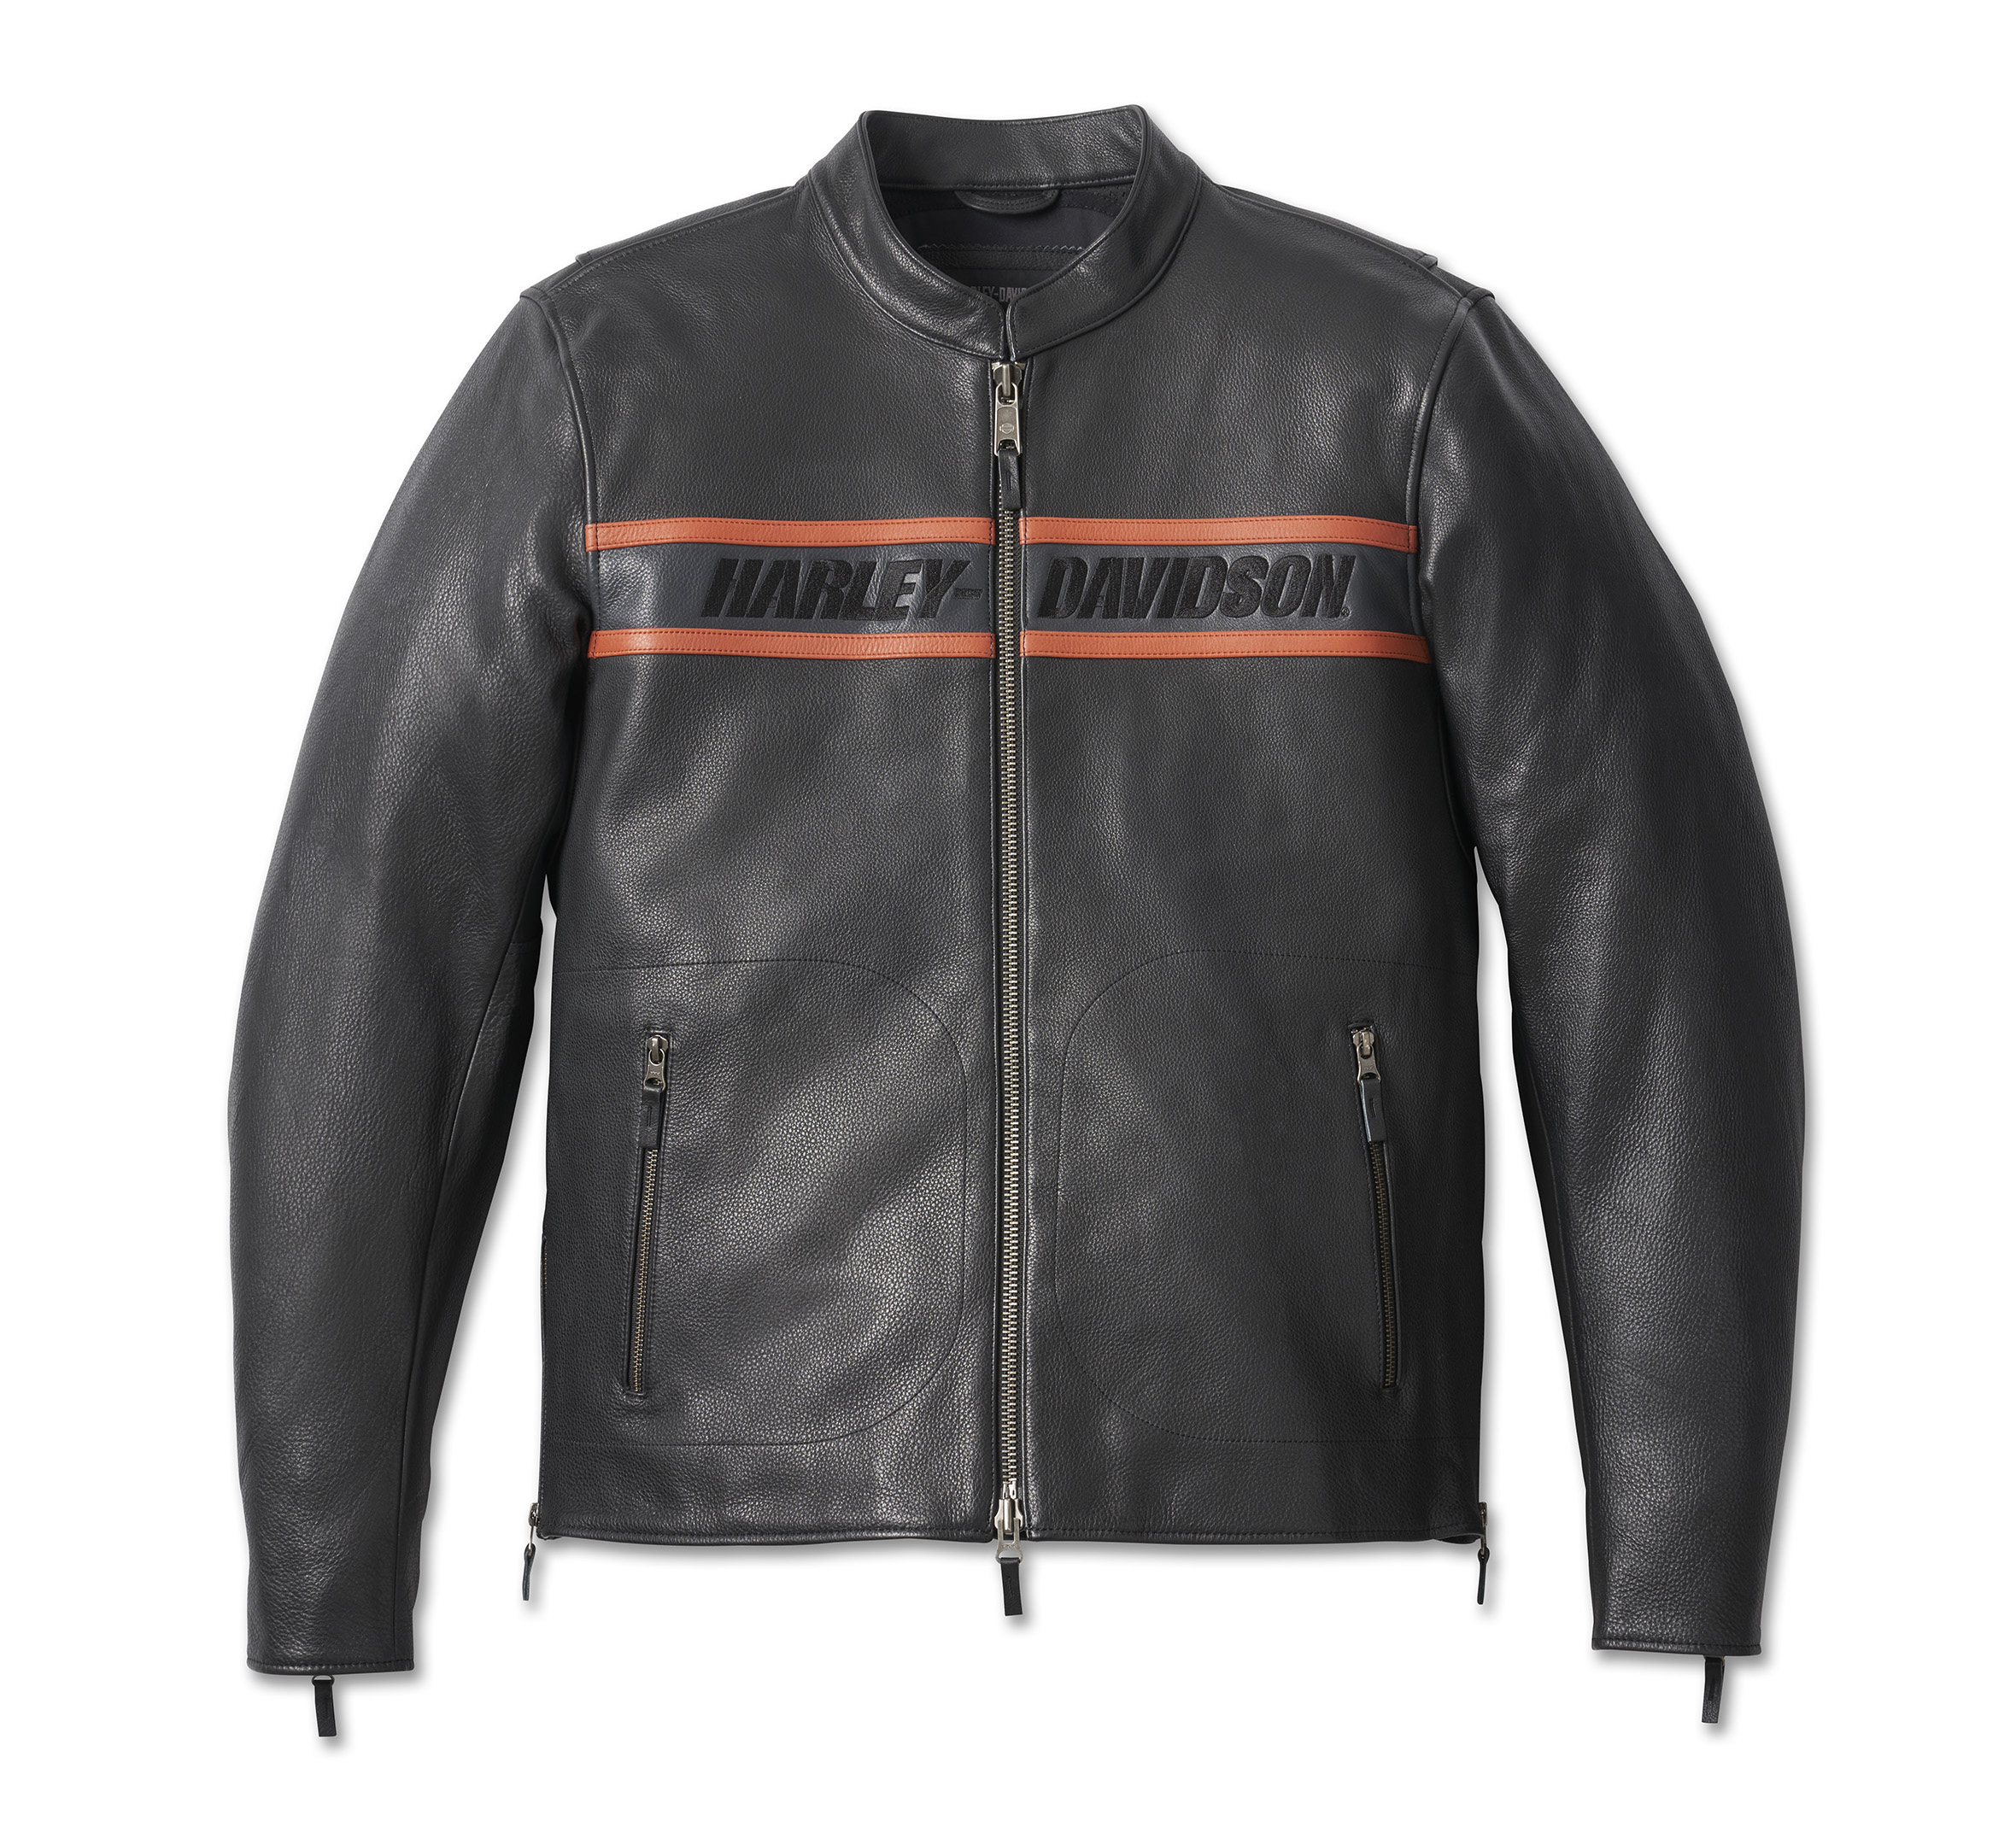 Men's Leather Motorcycle Jackets | Harley-Davidson USA